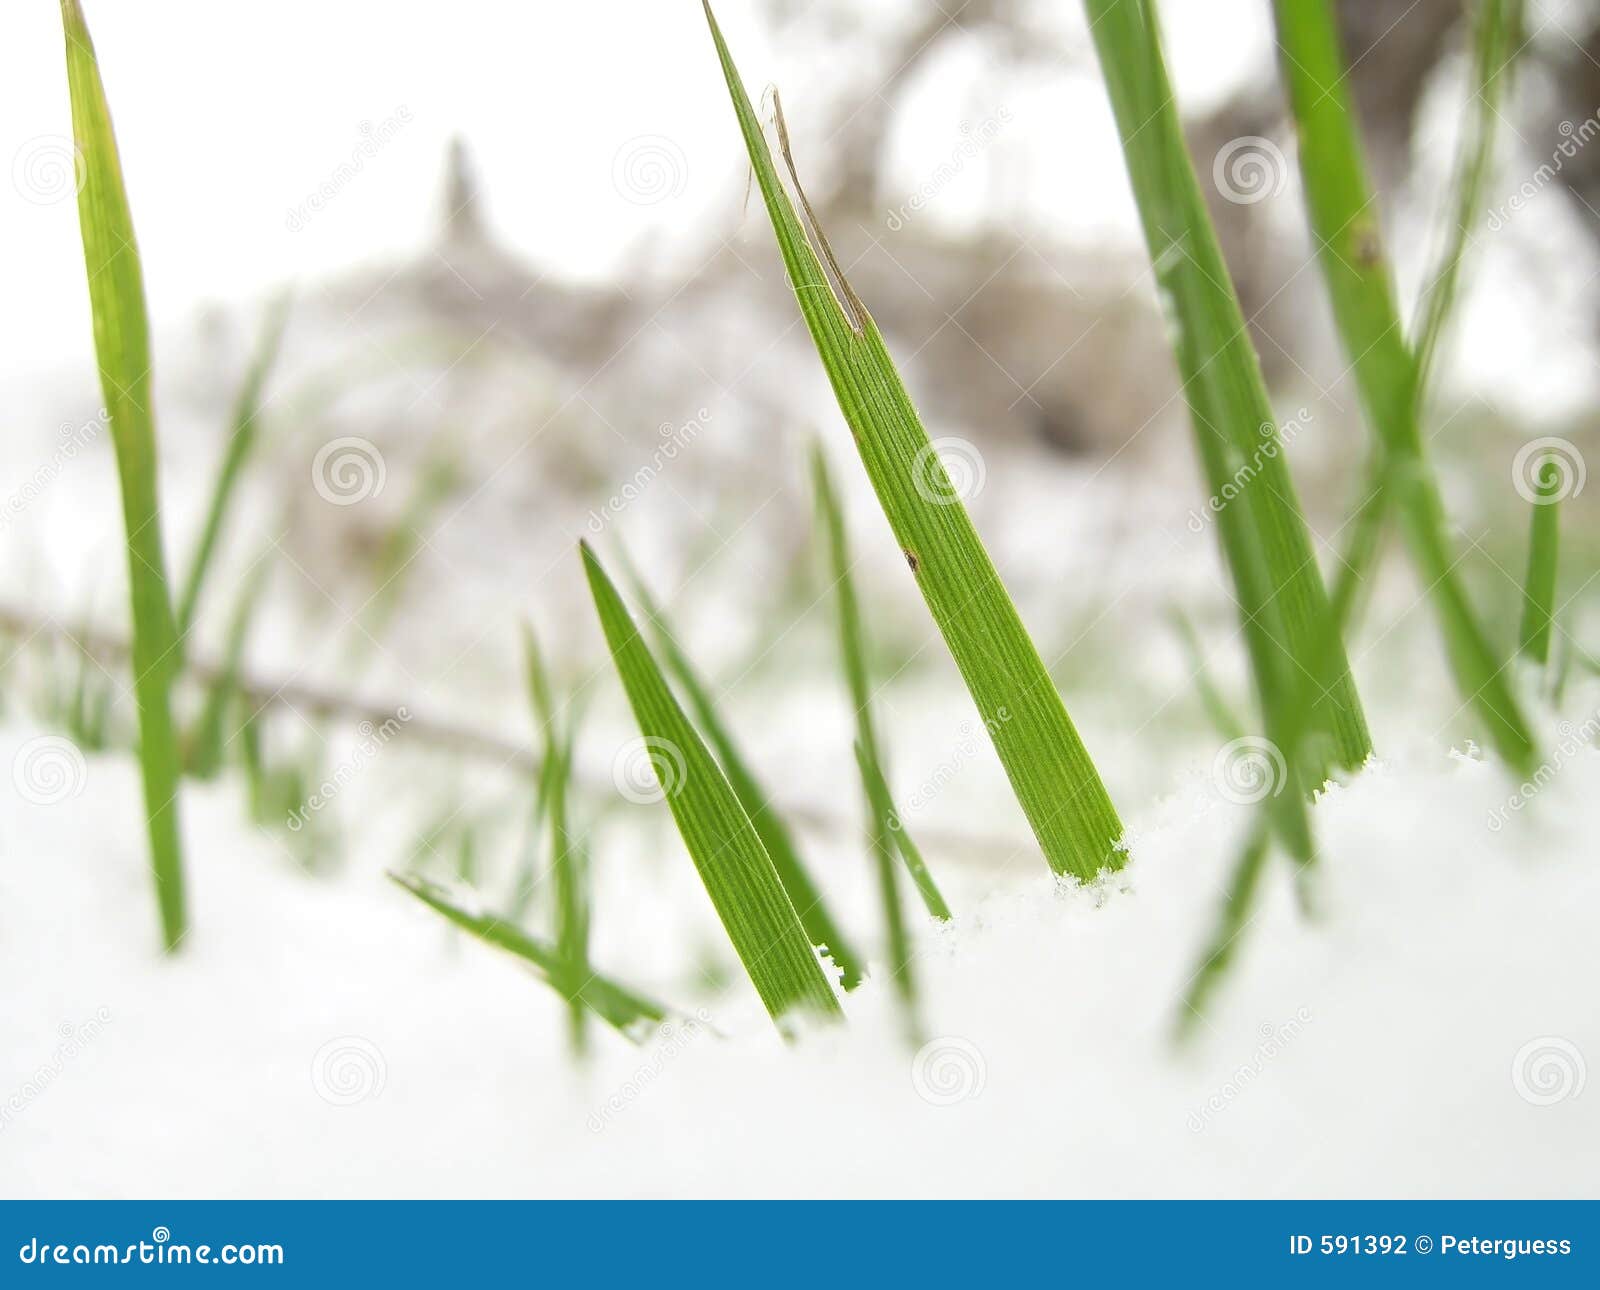 blades of grass in snow